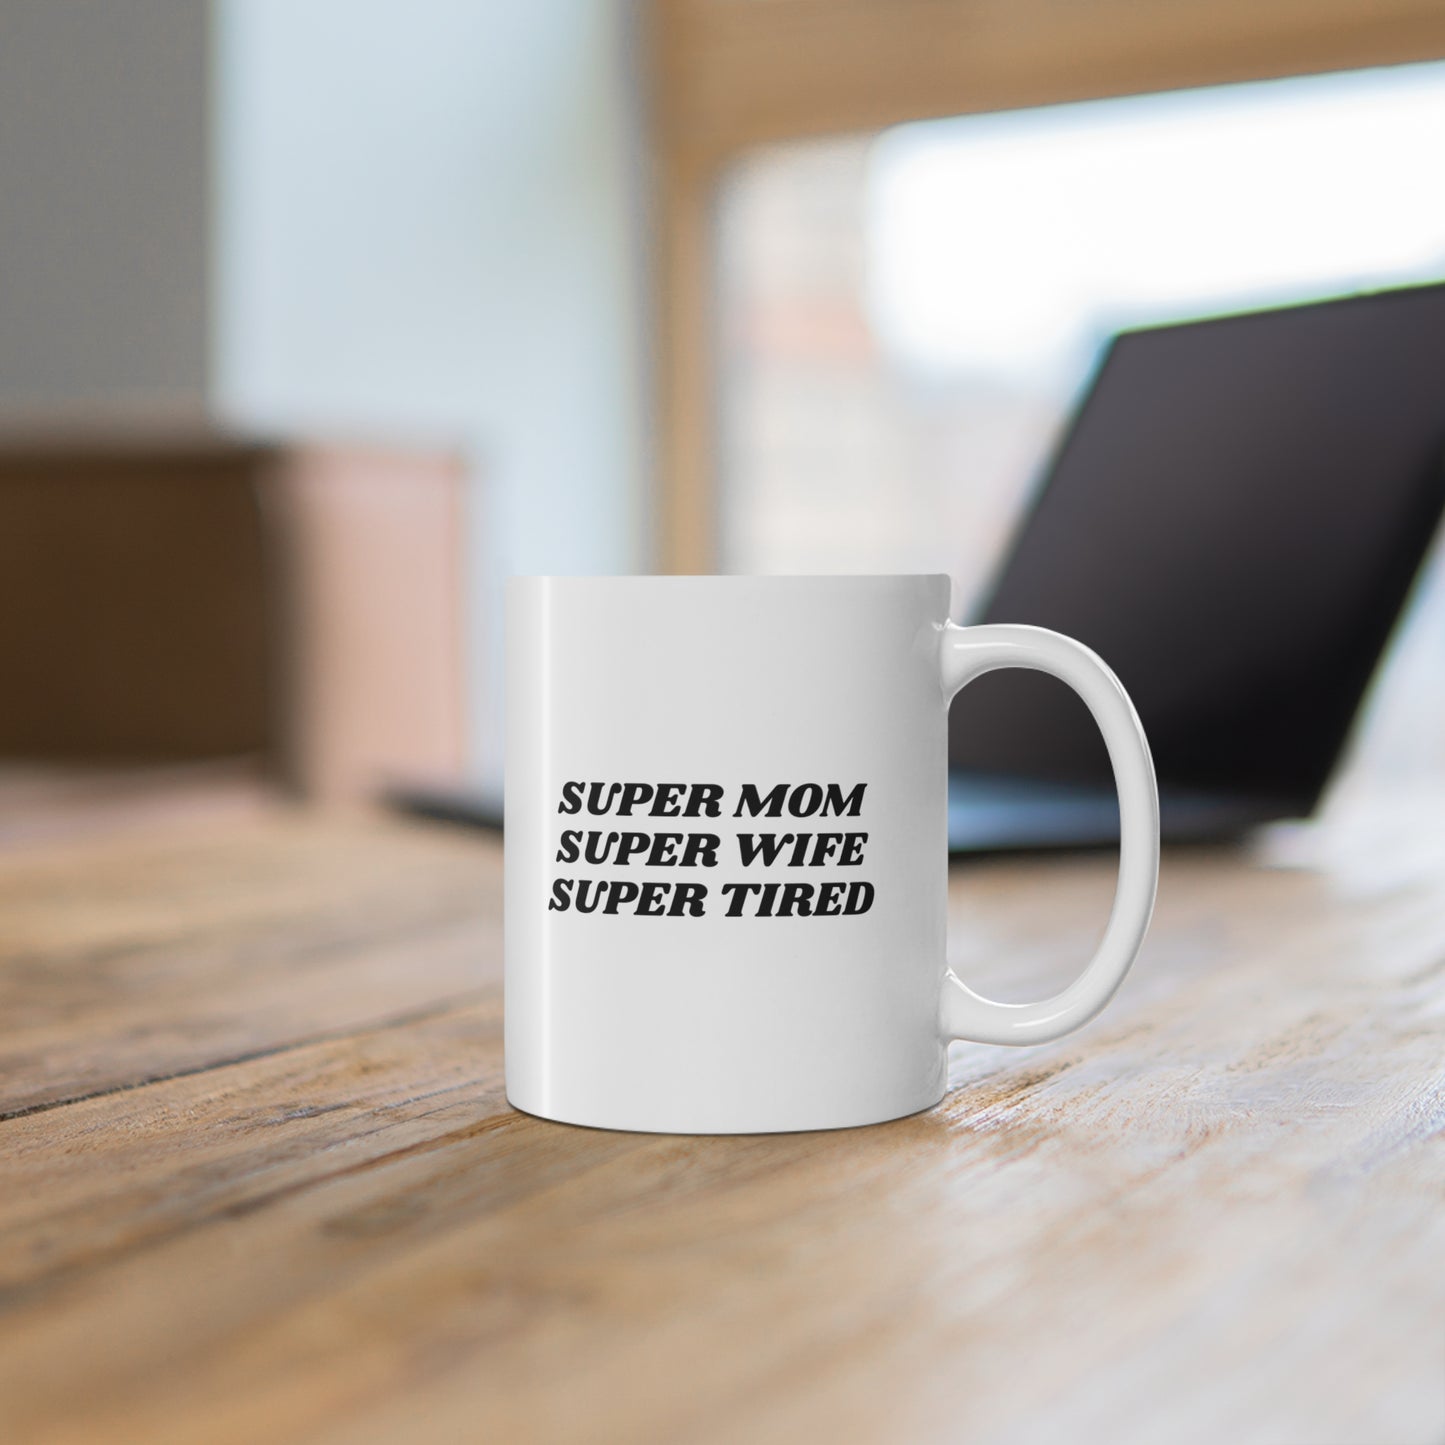 11oz ceramic mug with quote Super Mom Super Wife Super Tired